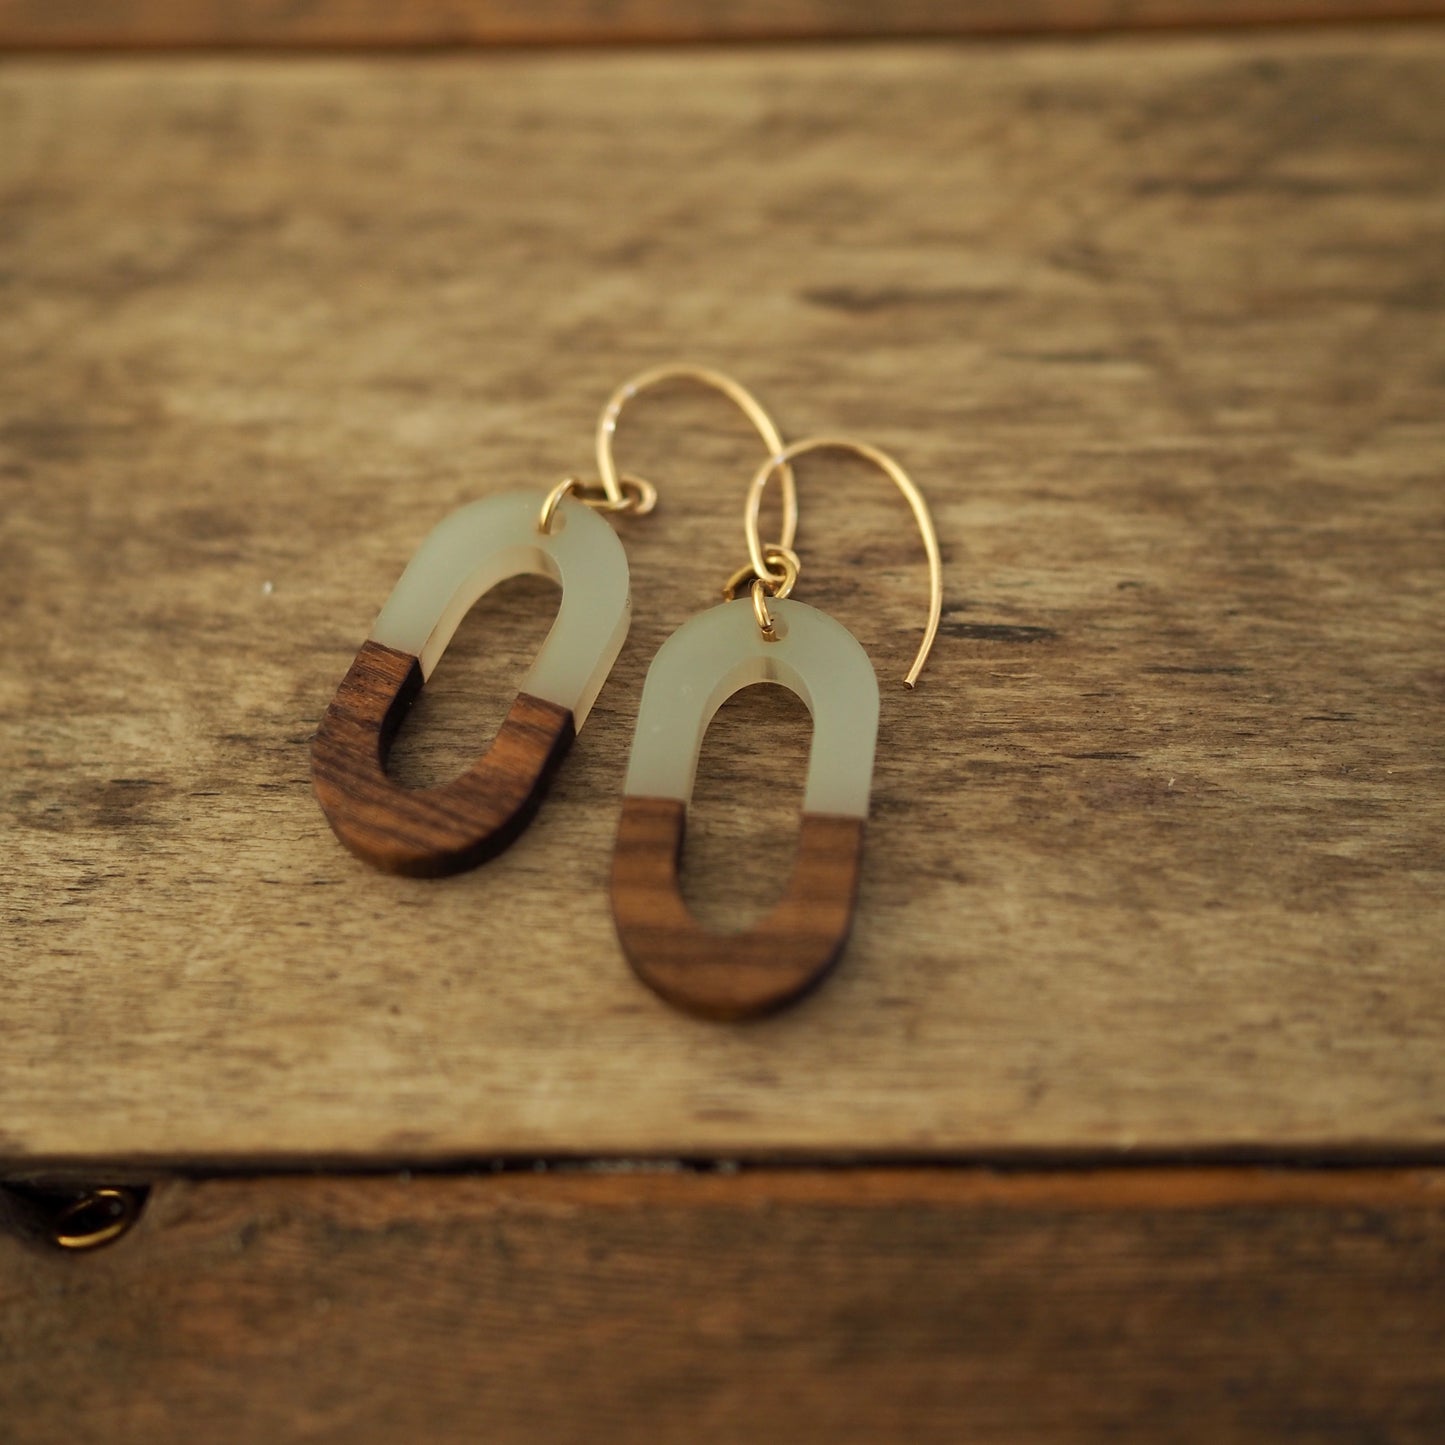 Resin and wood earrings for fall by Nancy Wallis Designs